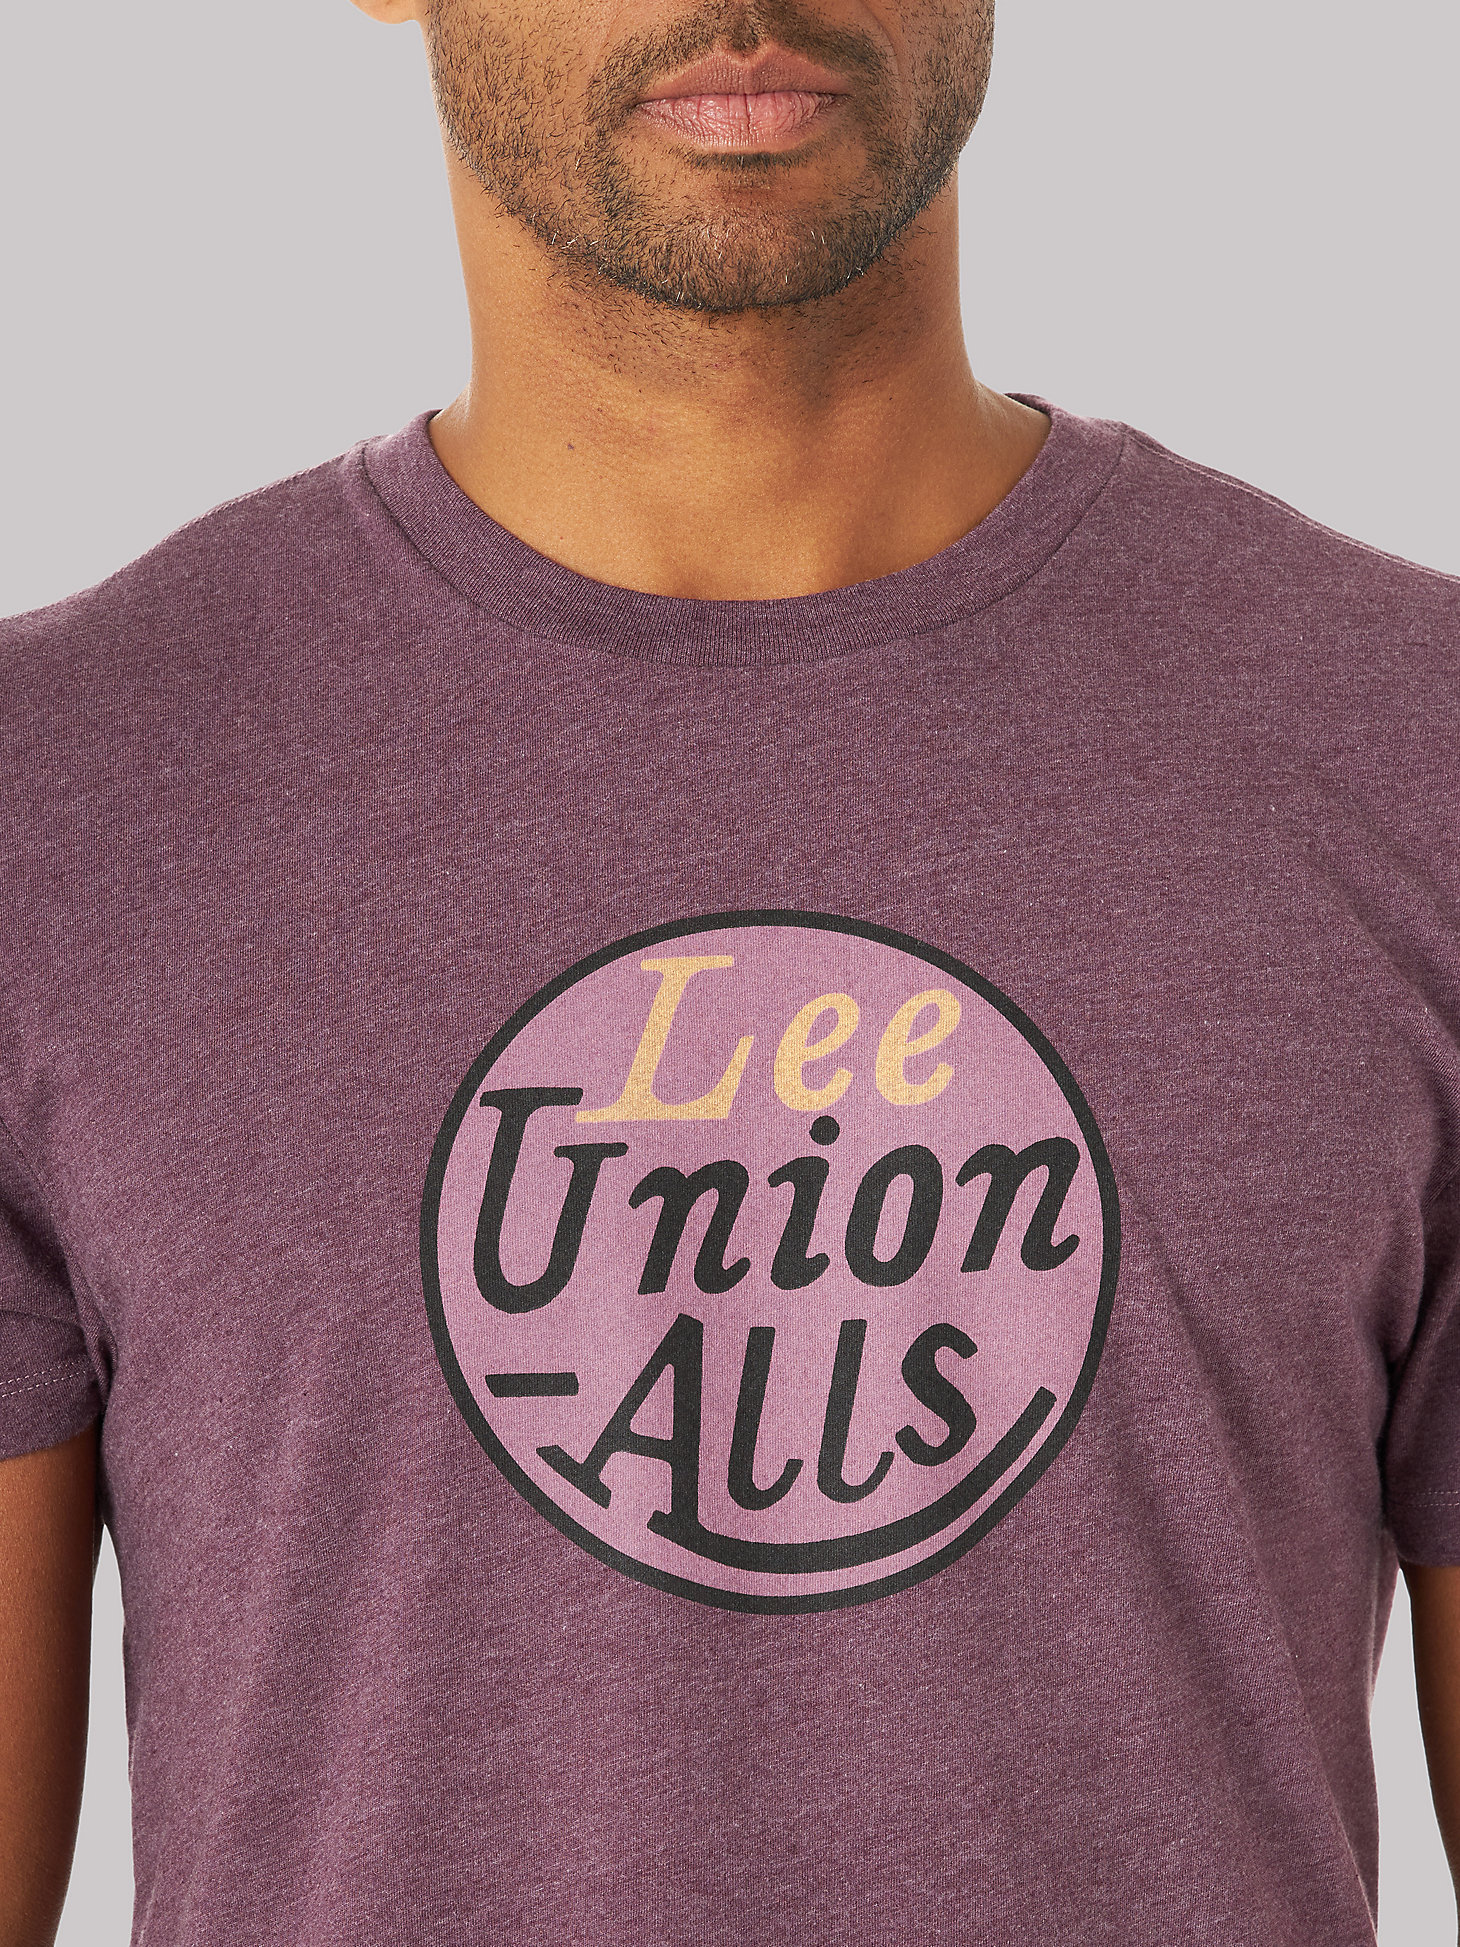 Men's Union-Alls™ Graphic Tee in Heather Weldon alternative view 2